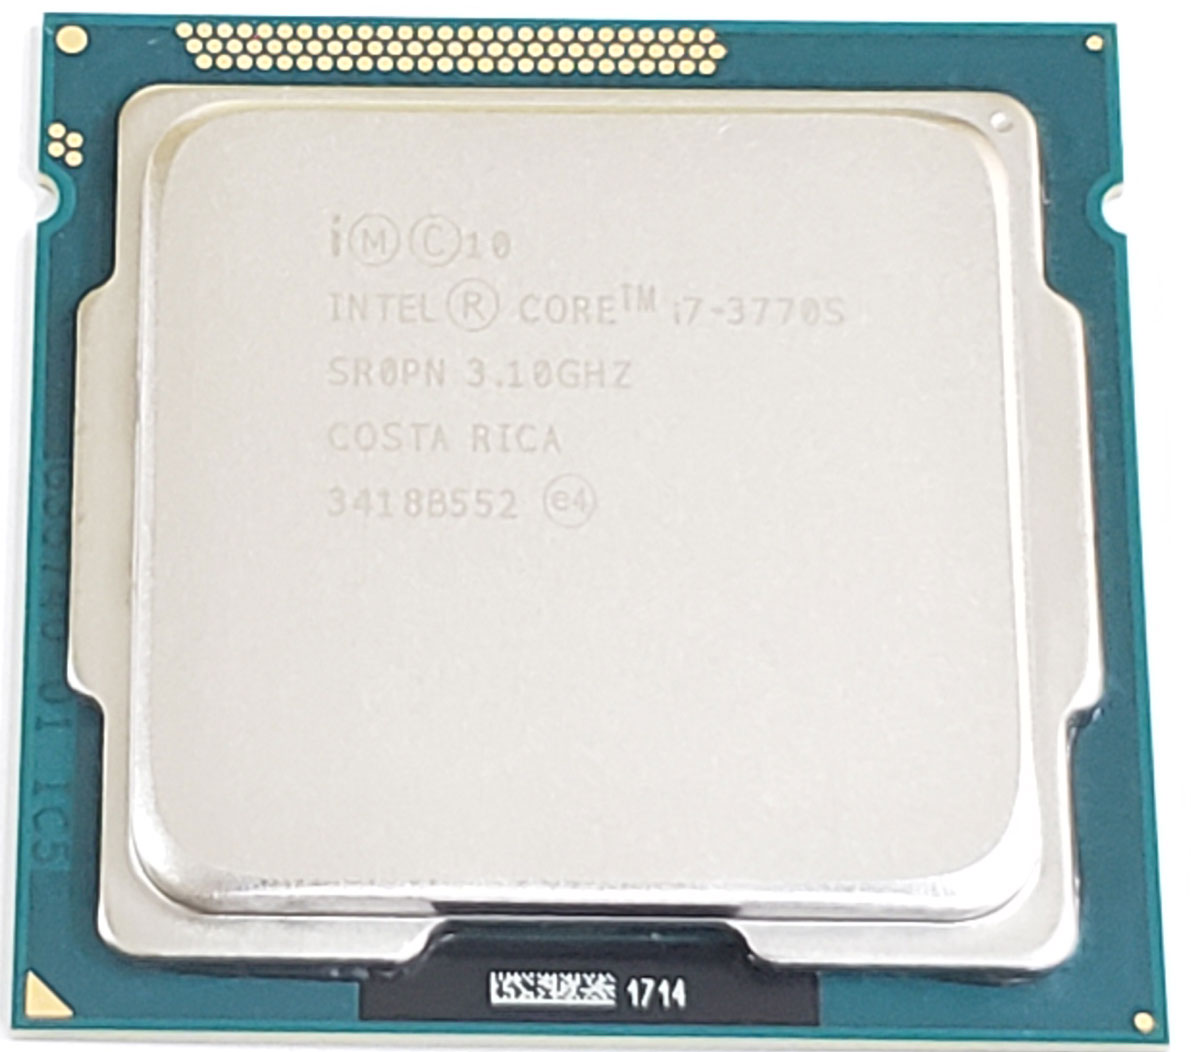 Интел i7 3770. Процессор Intel Core i7-3770s. I7 3770 сокет. Core i7-3770s 3.1GHZ. Процессор Intel Core i7 3770k 12.